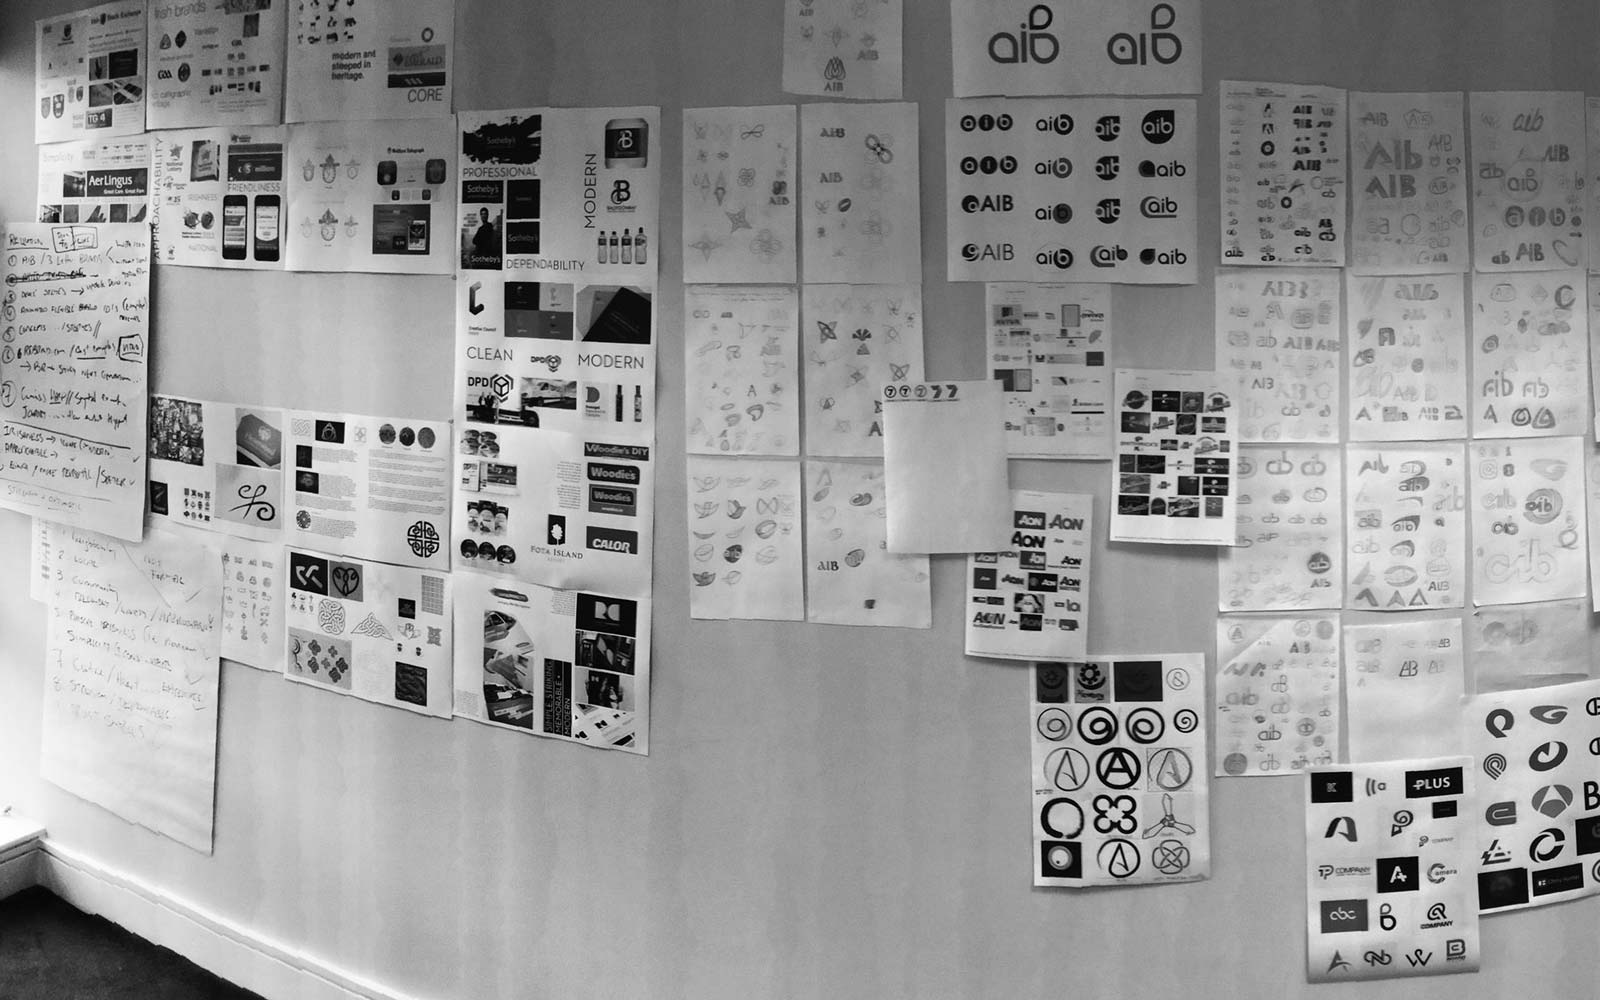 AIB brand design concept idea board brainstorming